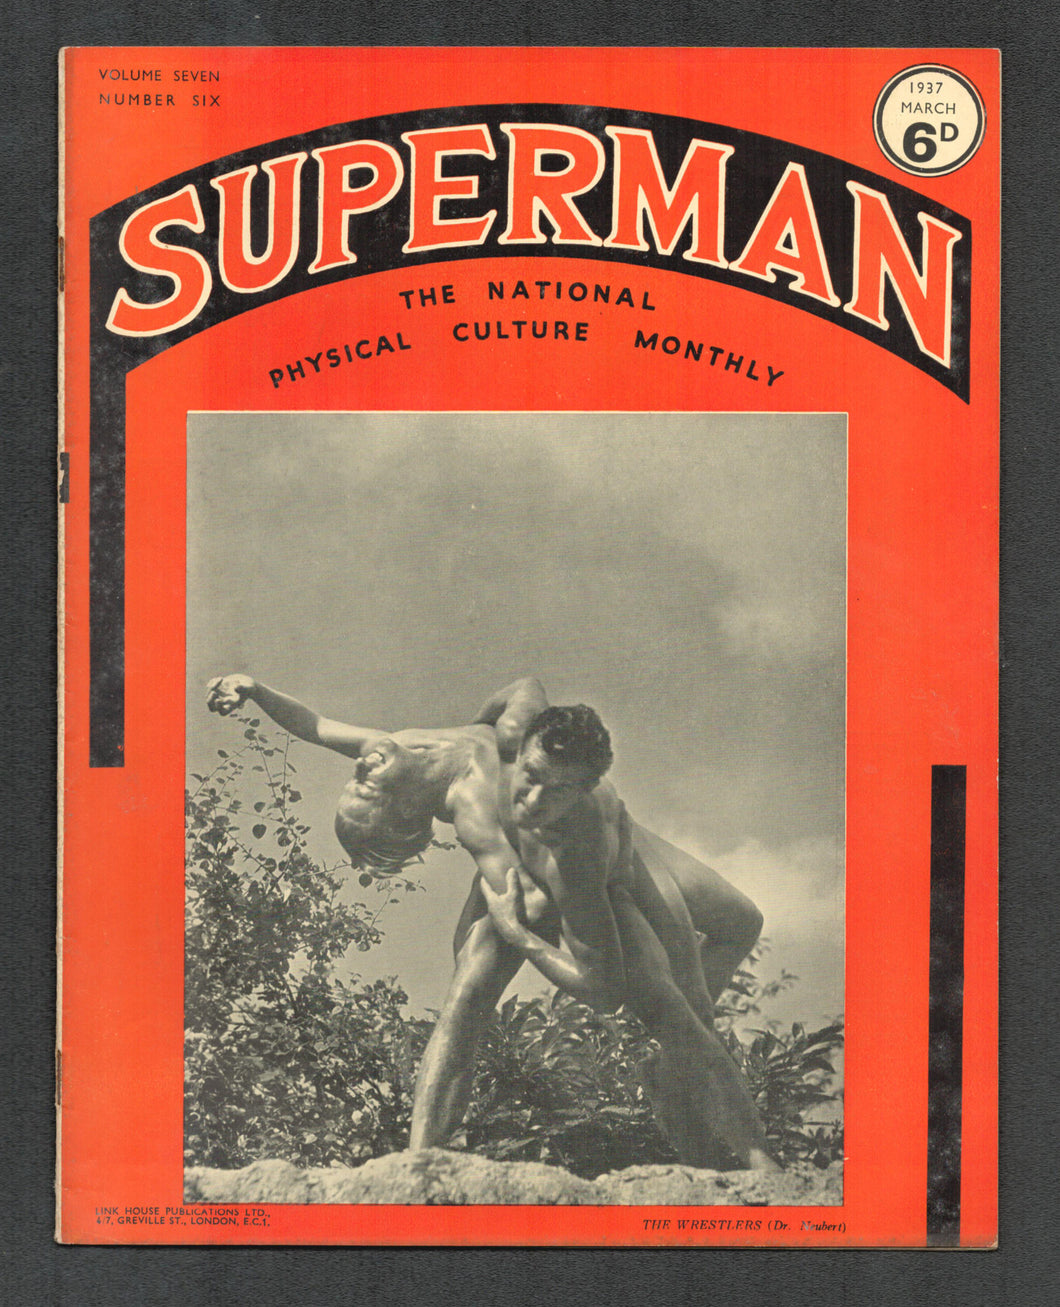 Superman Vol 7 No 6 March 1937